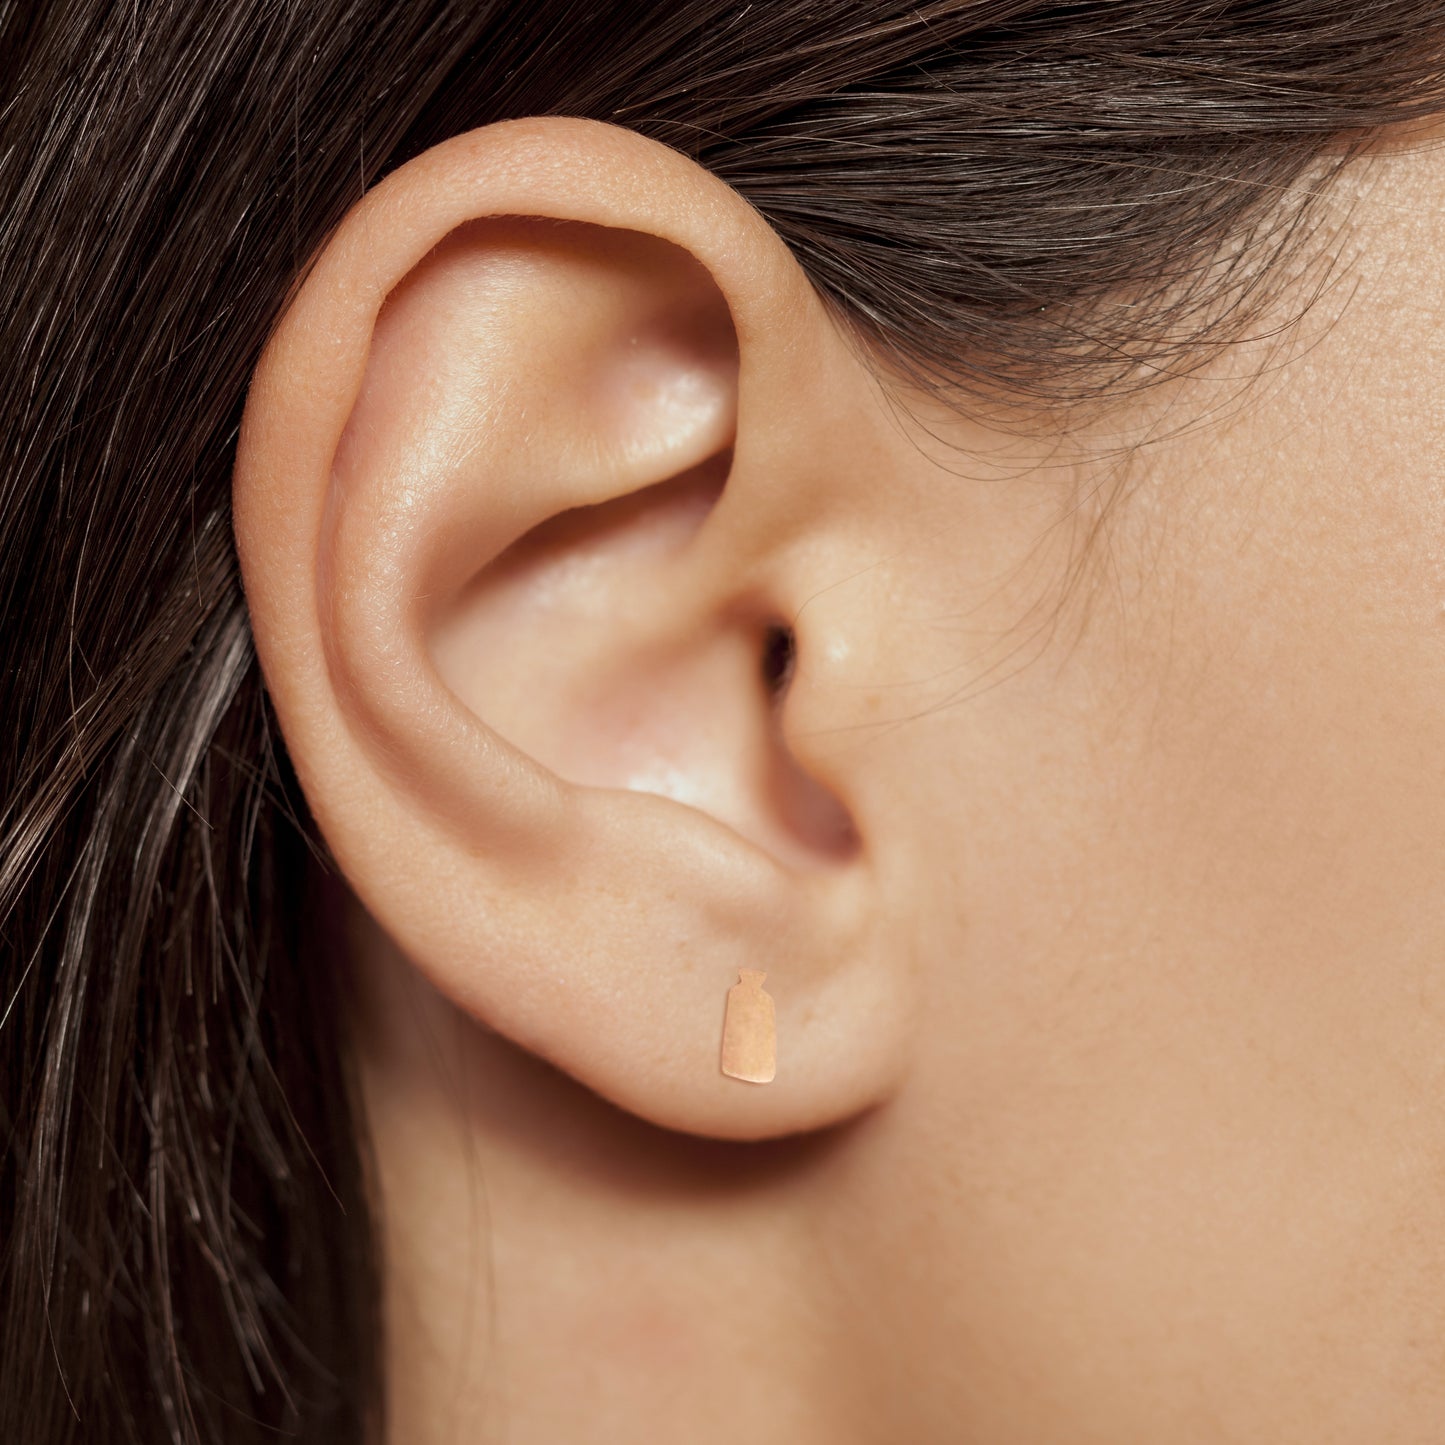 Vial earring in rose gold on nurse model ear